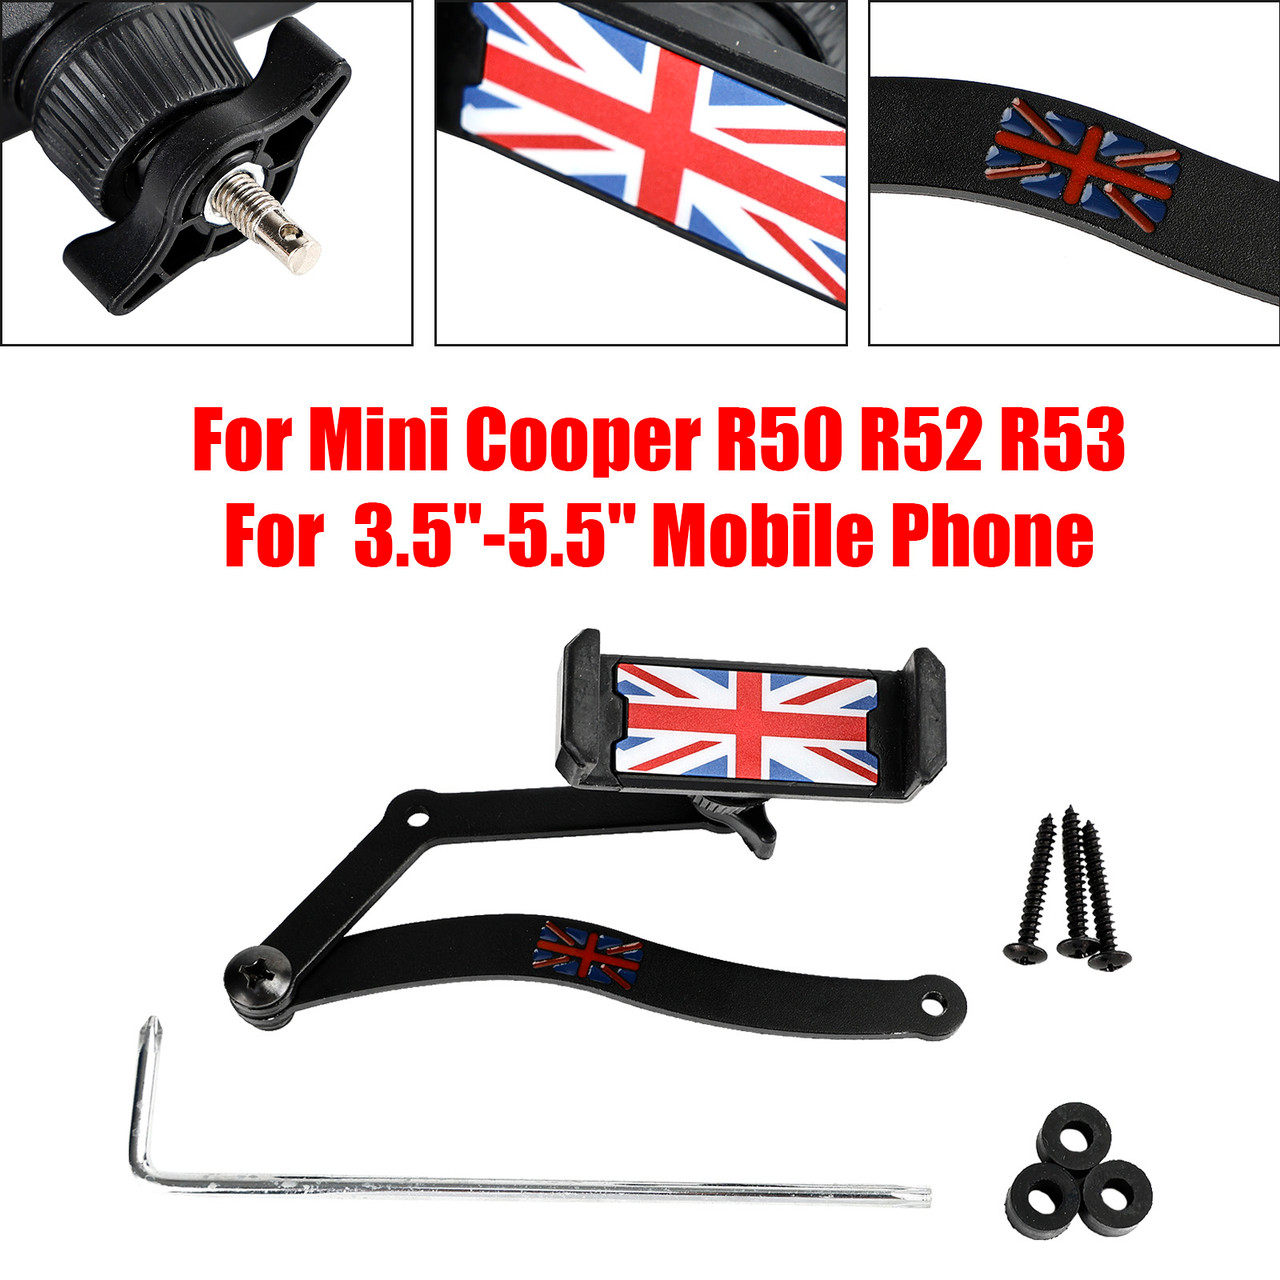 360¡ãRotation Car Mobile Phone Holder Mount for Mini Cooper R50 R52 R53 Red